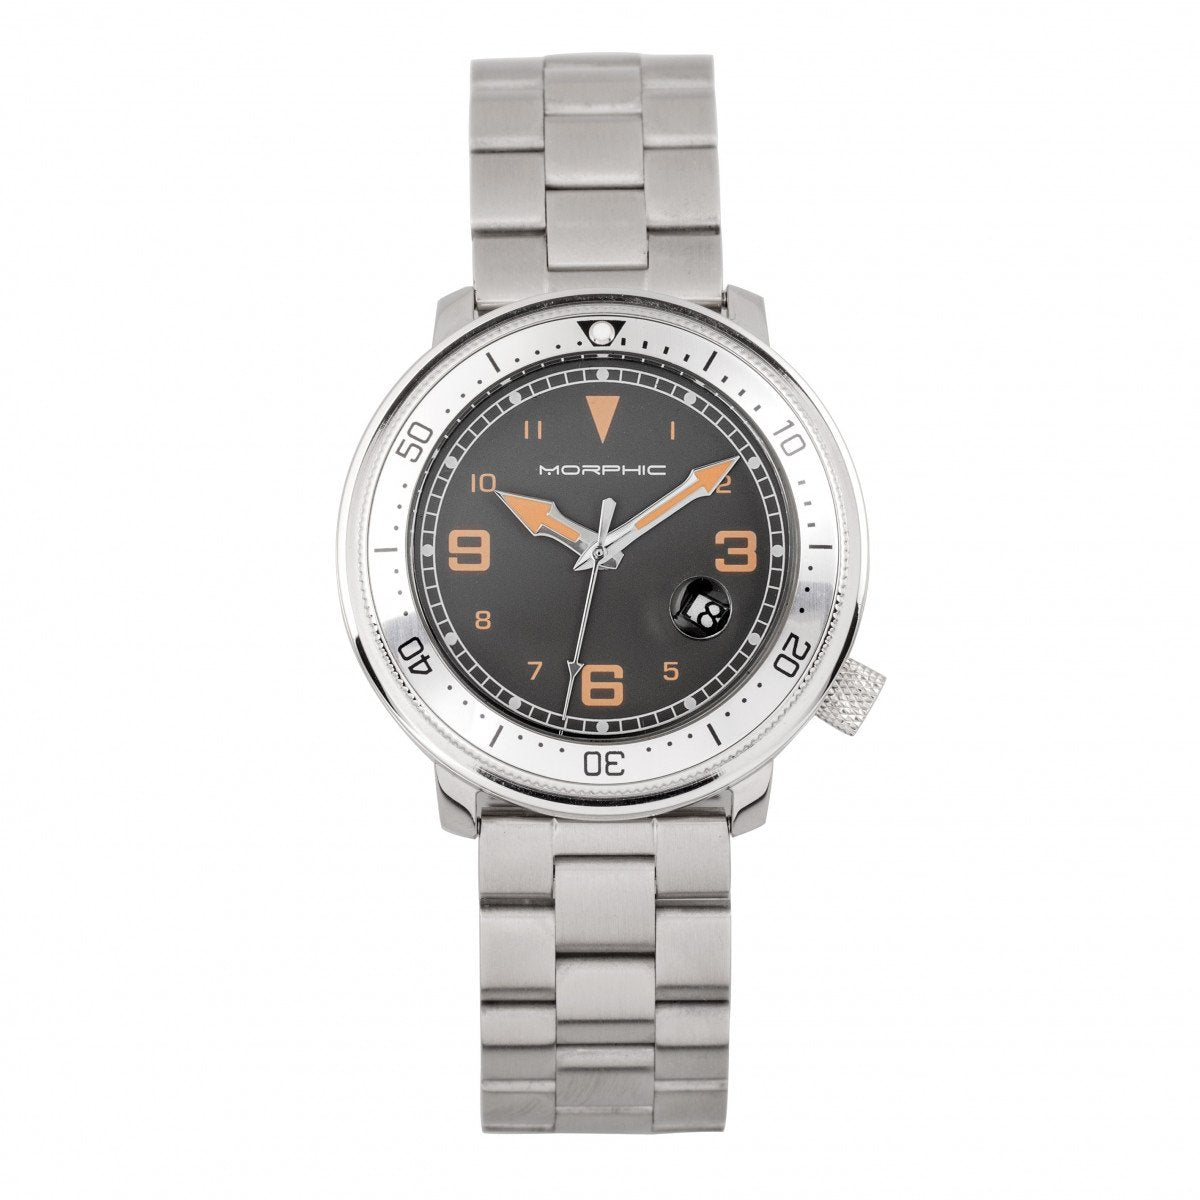 Morphic M74 Series Bracelet Watch w/Magnified Date Display - Gunmetal/Silver/Brown - MPH7402